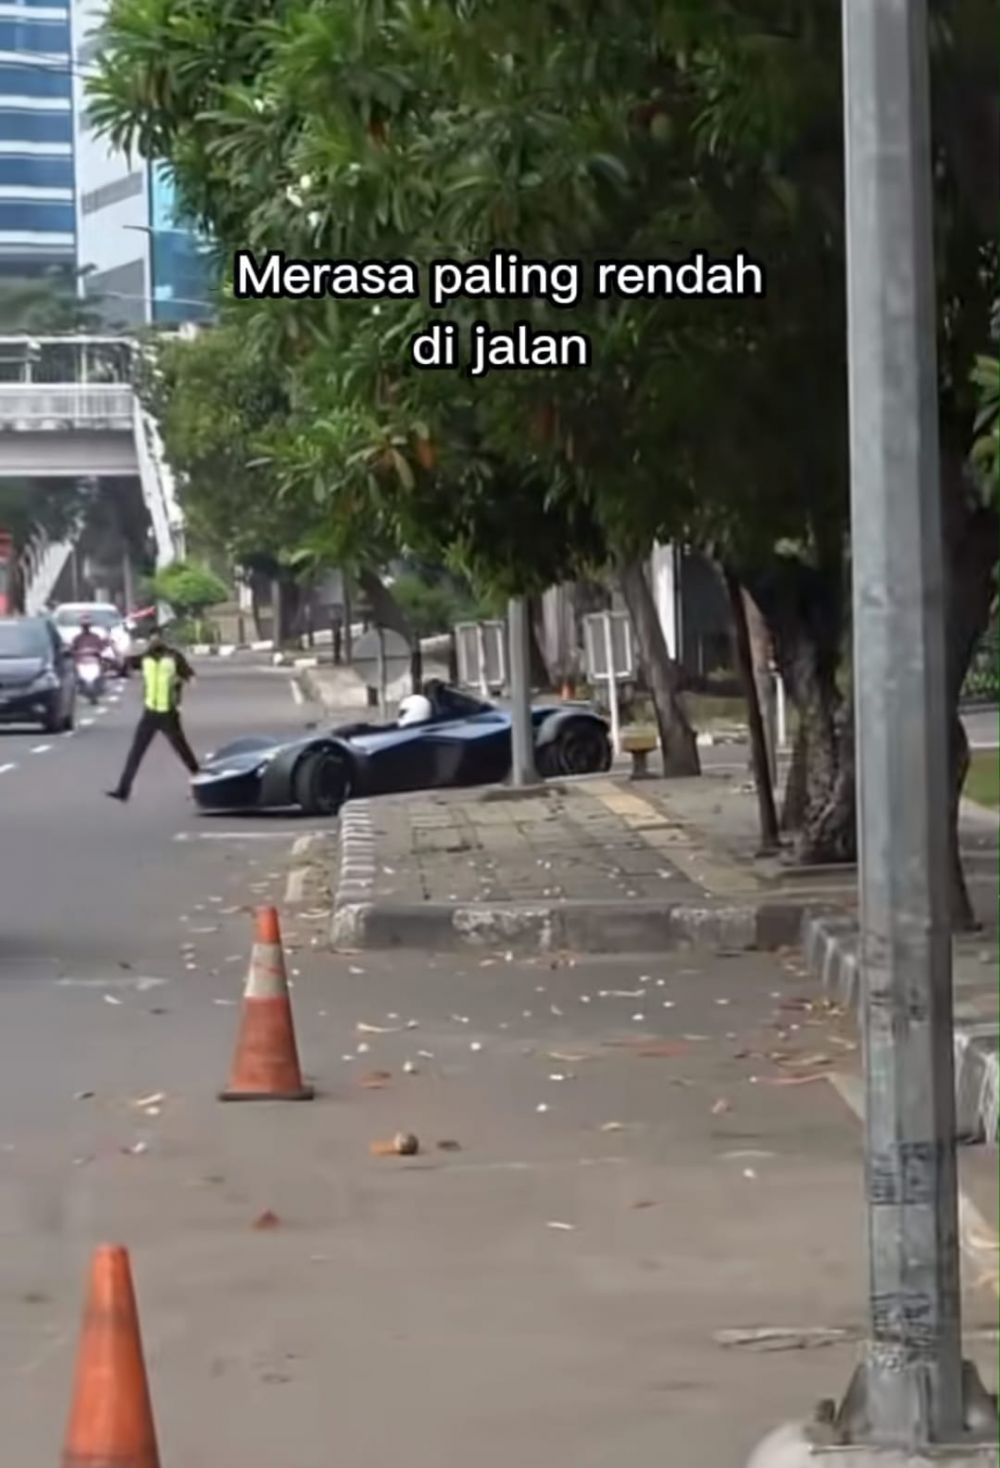 Momen mobil F1 berkeliaran di jalanan Jakarta ini tuai pro kontra netizen, legal nggak sih?